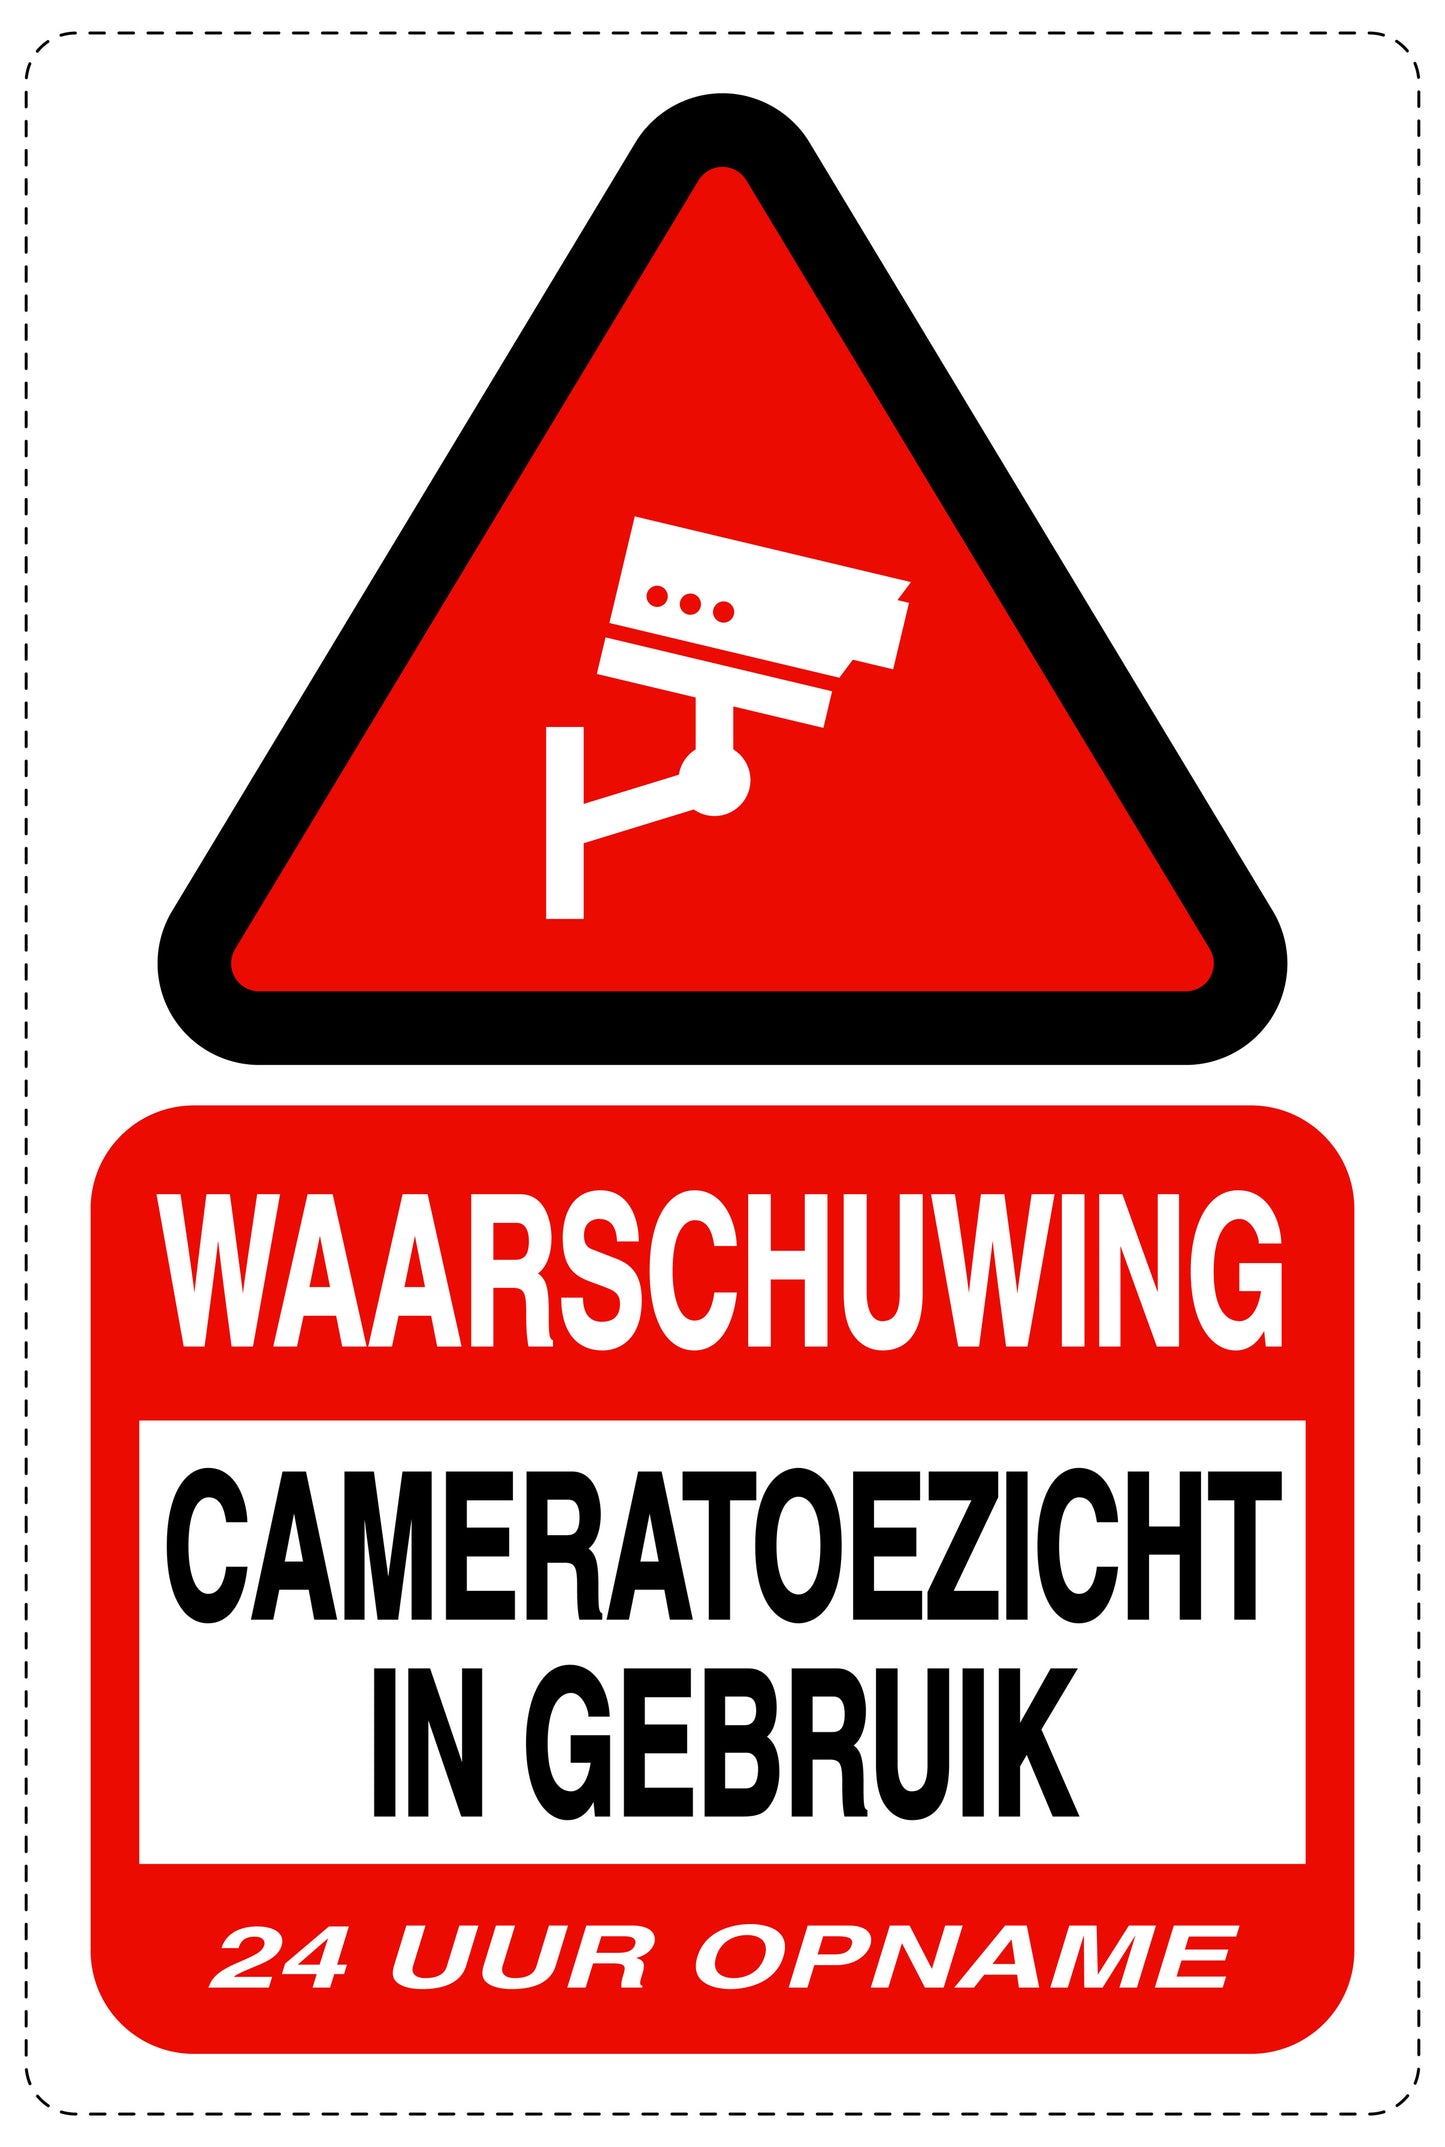 Geen toegang - videobewaking "Waarschuwing cameratoezicht in gebruik 24 uur video opname" 10-40 cm EW-RESTRICT-2240